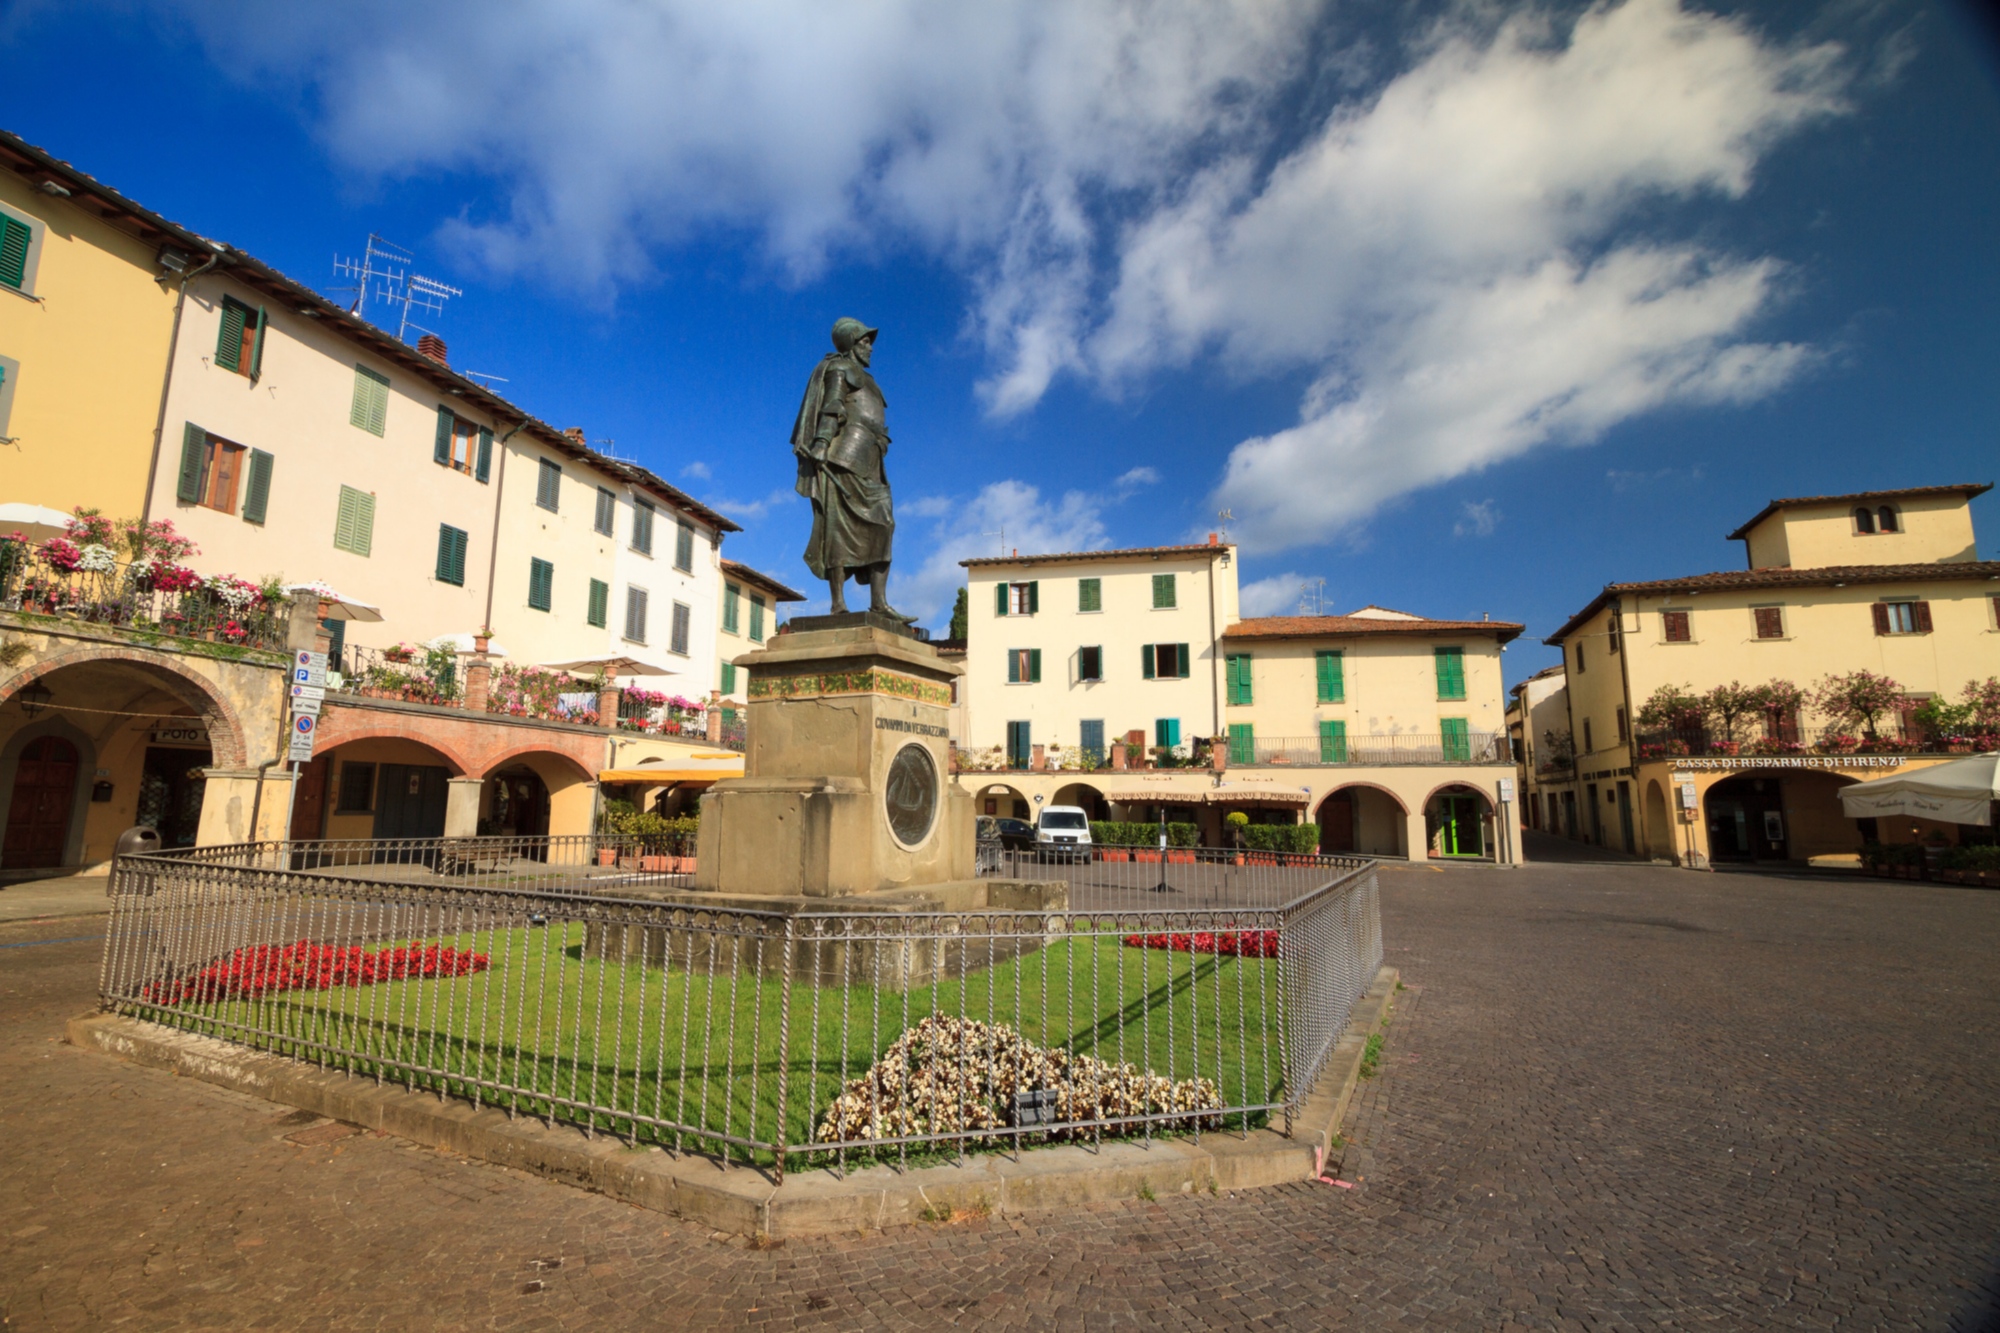 Piazza in Greve, surrounded by colonnades, with the centre statue dedicated to Giovanni da Verrazzano